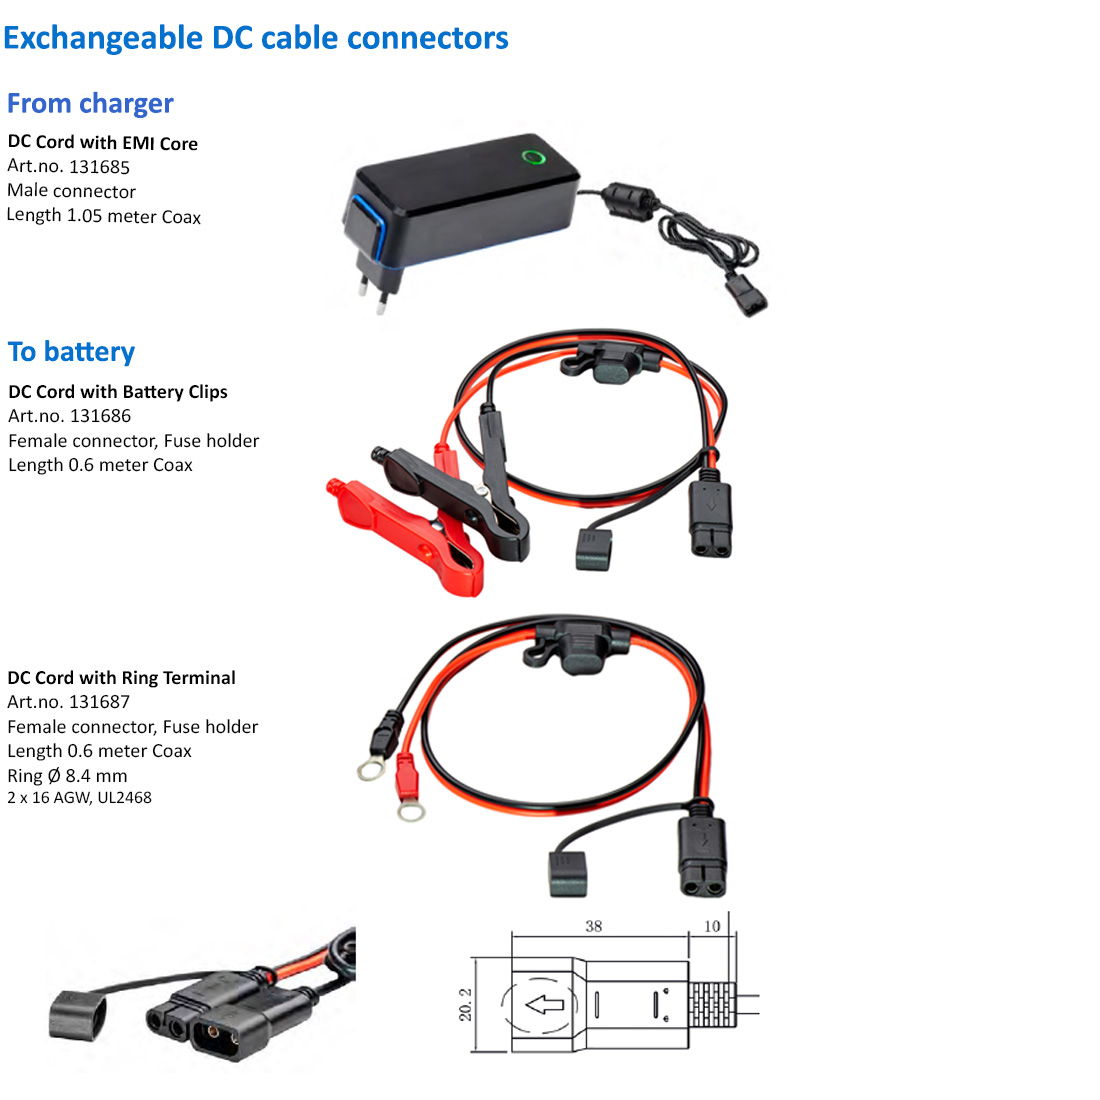 Exch-dc-connectors.jpg